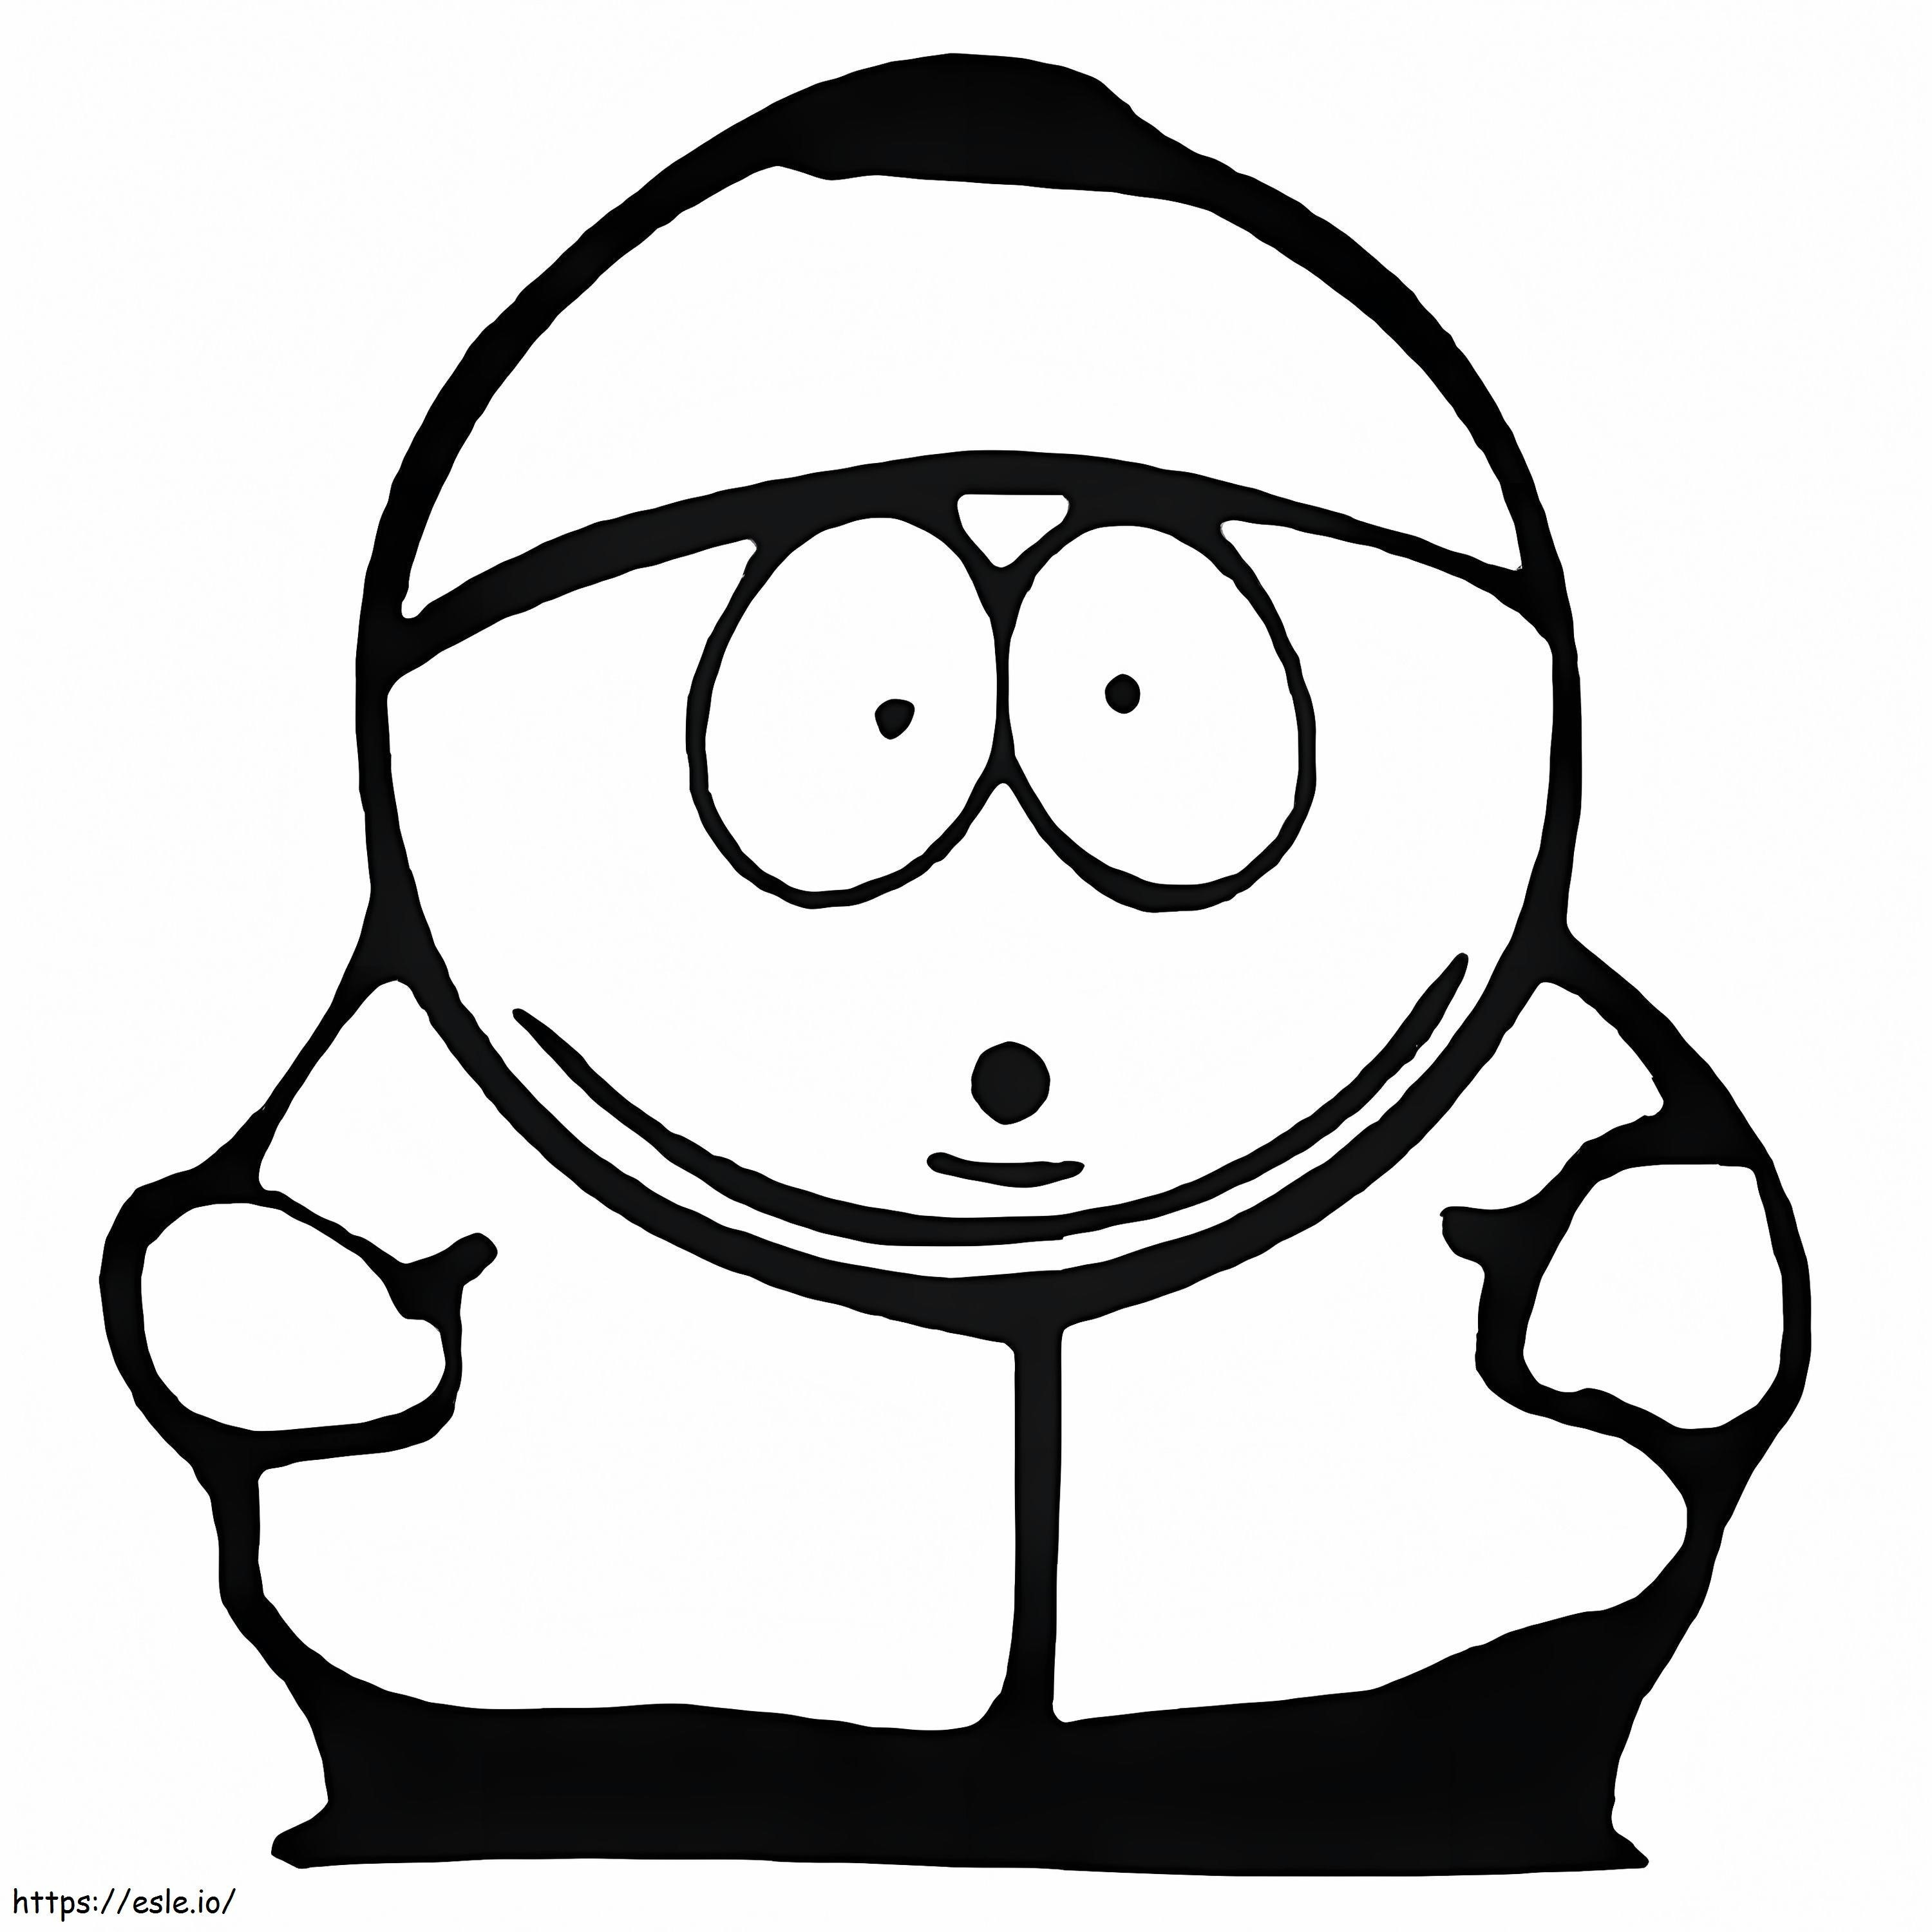 Zabawny Eric Cartman kolorowanka